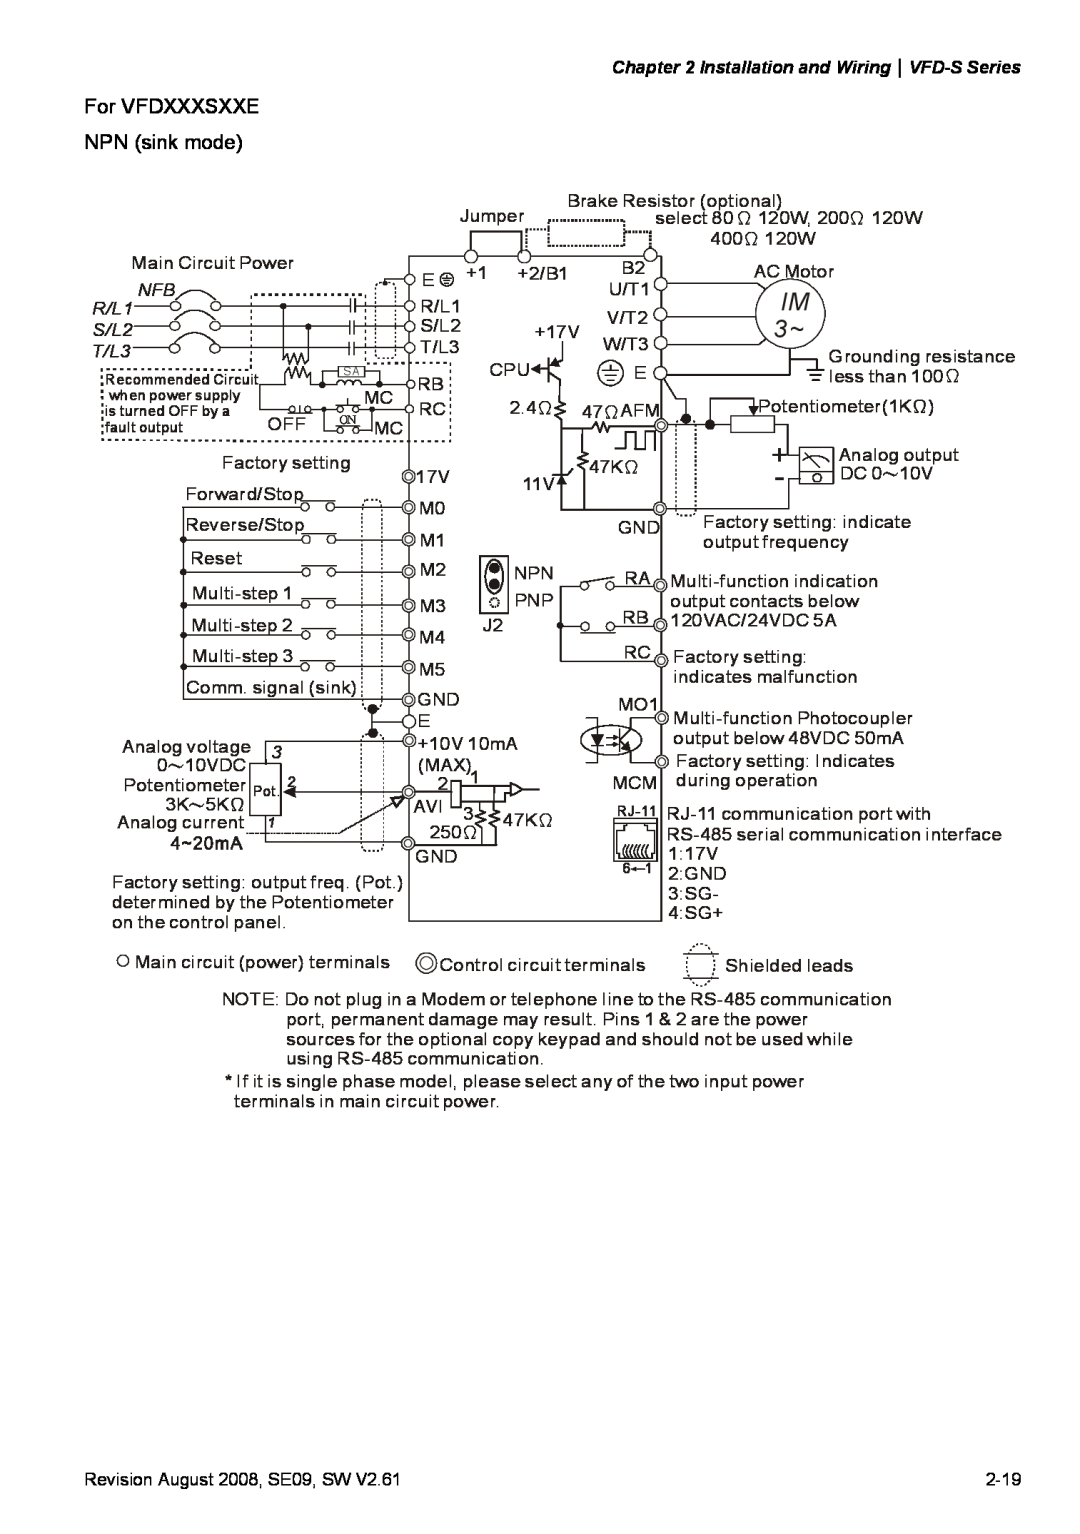 Delta Electronics manual Installation and WiringVFD-S Series, R/L1, S/L2, T/L3 